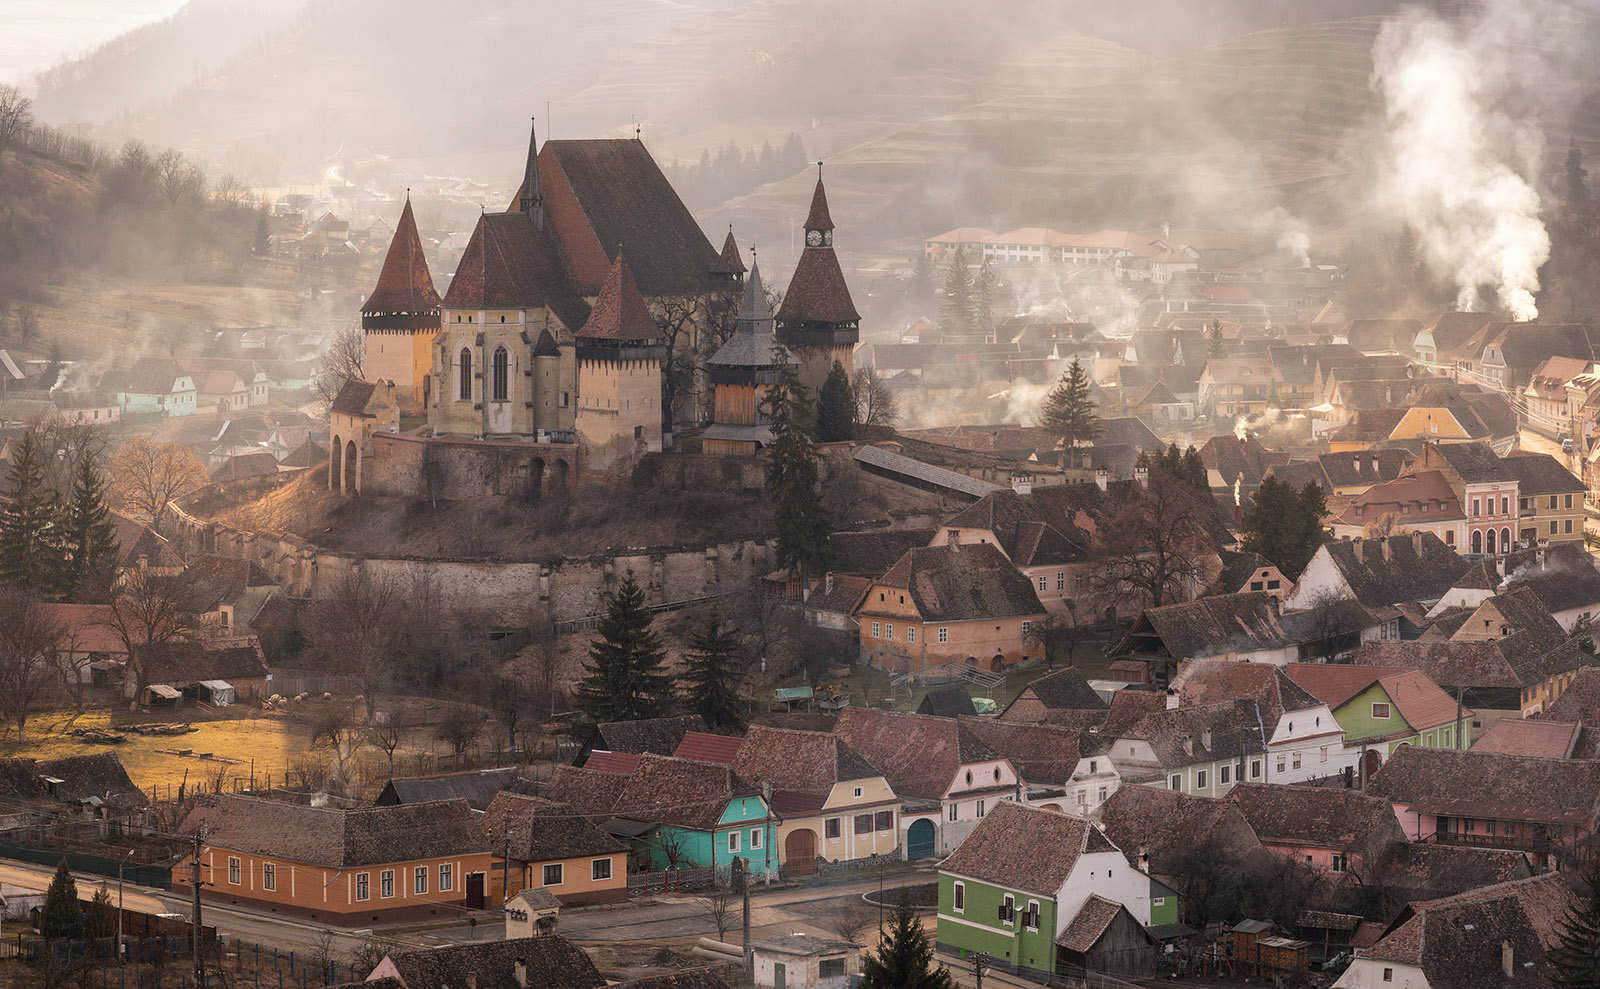 Transylvania, Reading+Empathy, Haunted House Novels, World Cuisine & More: Endnotes 27 October